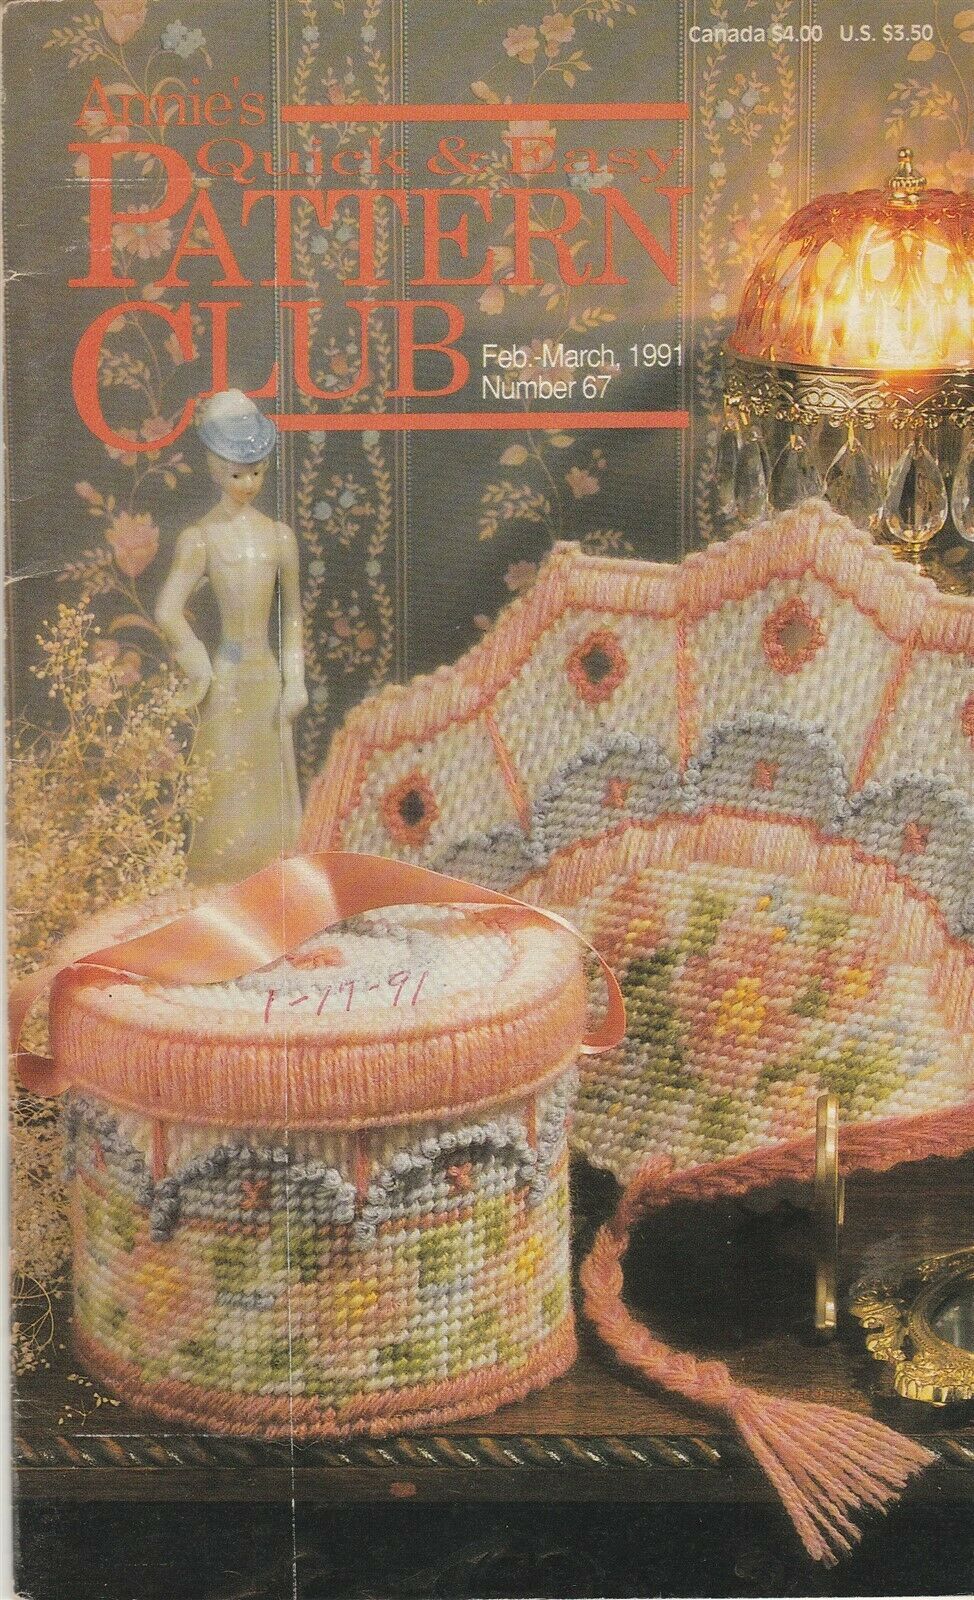 Annie's Pattern Club No 67 Feb-Mar 1991 - $2.97